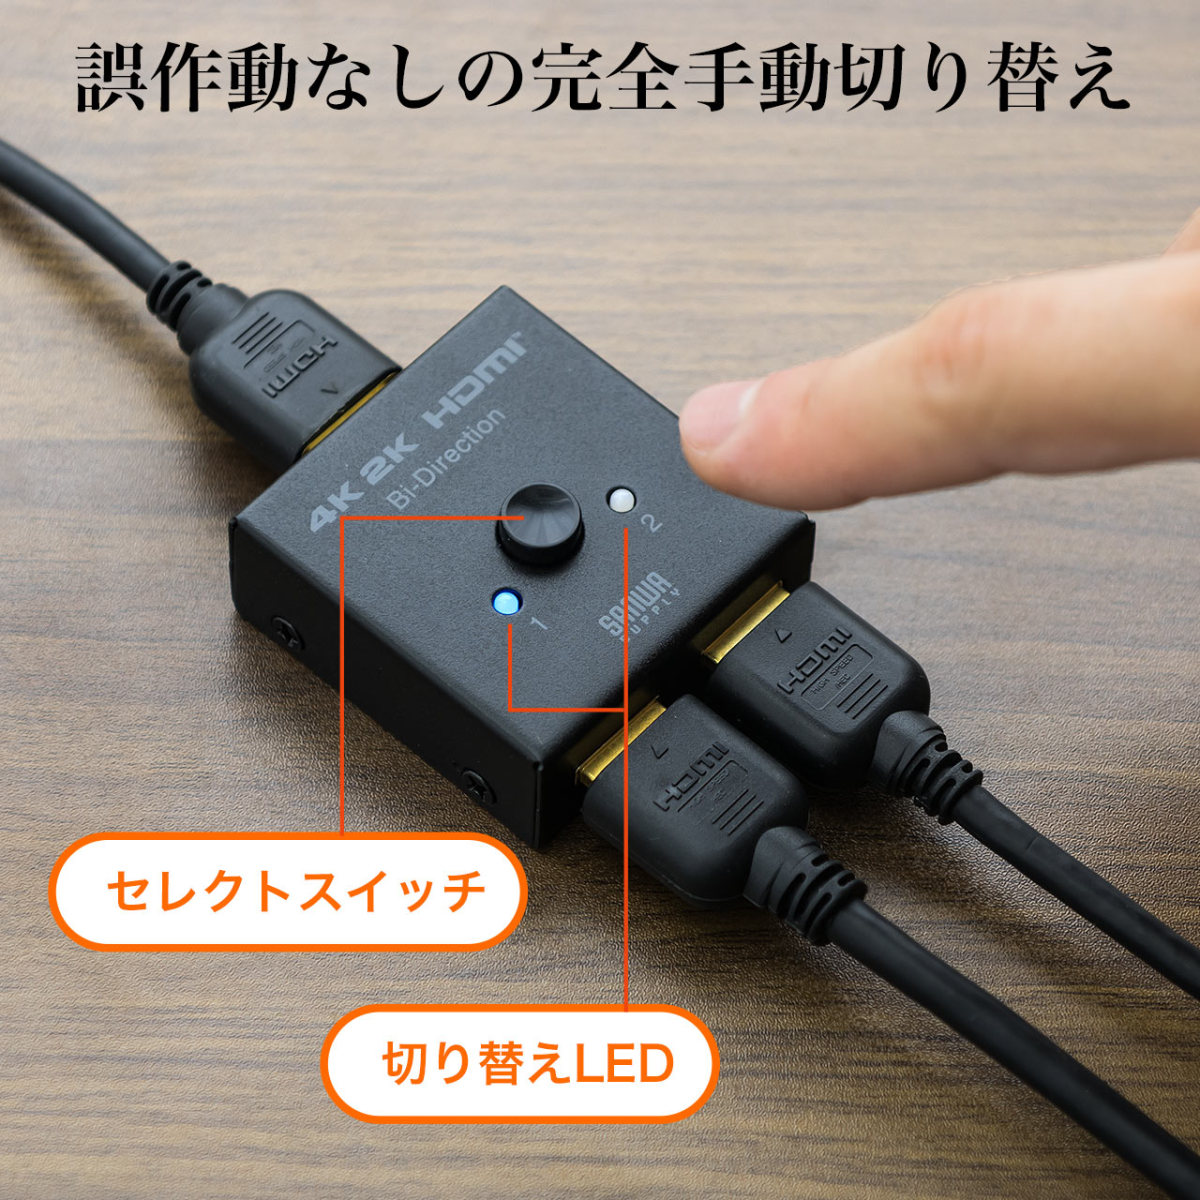 HDMIセレクター HDMI 切替器 セレクター 4K対応 双方向 2入力1出力 1入力2出力 4K 30Hz対応 手動切替 HDCP対応 コンパクト  スリム 400-SW028 :400-SW028:サンワダイレクト 通販 